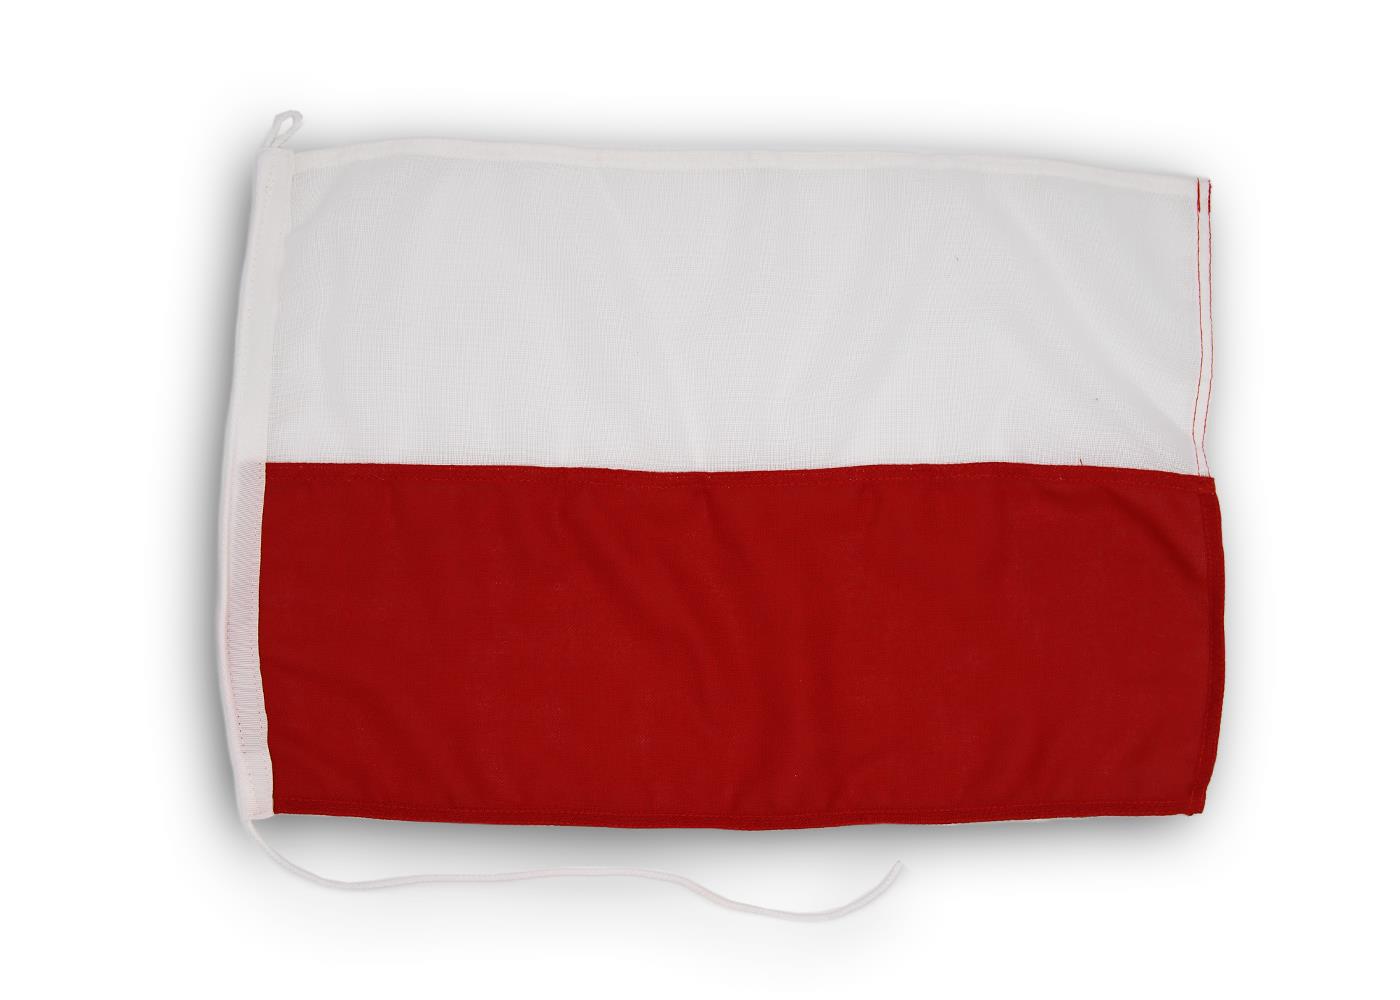 Gastlandflagge Polen 30X45cm